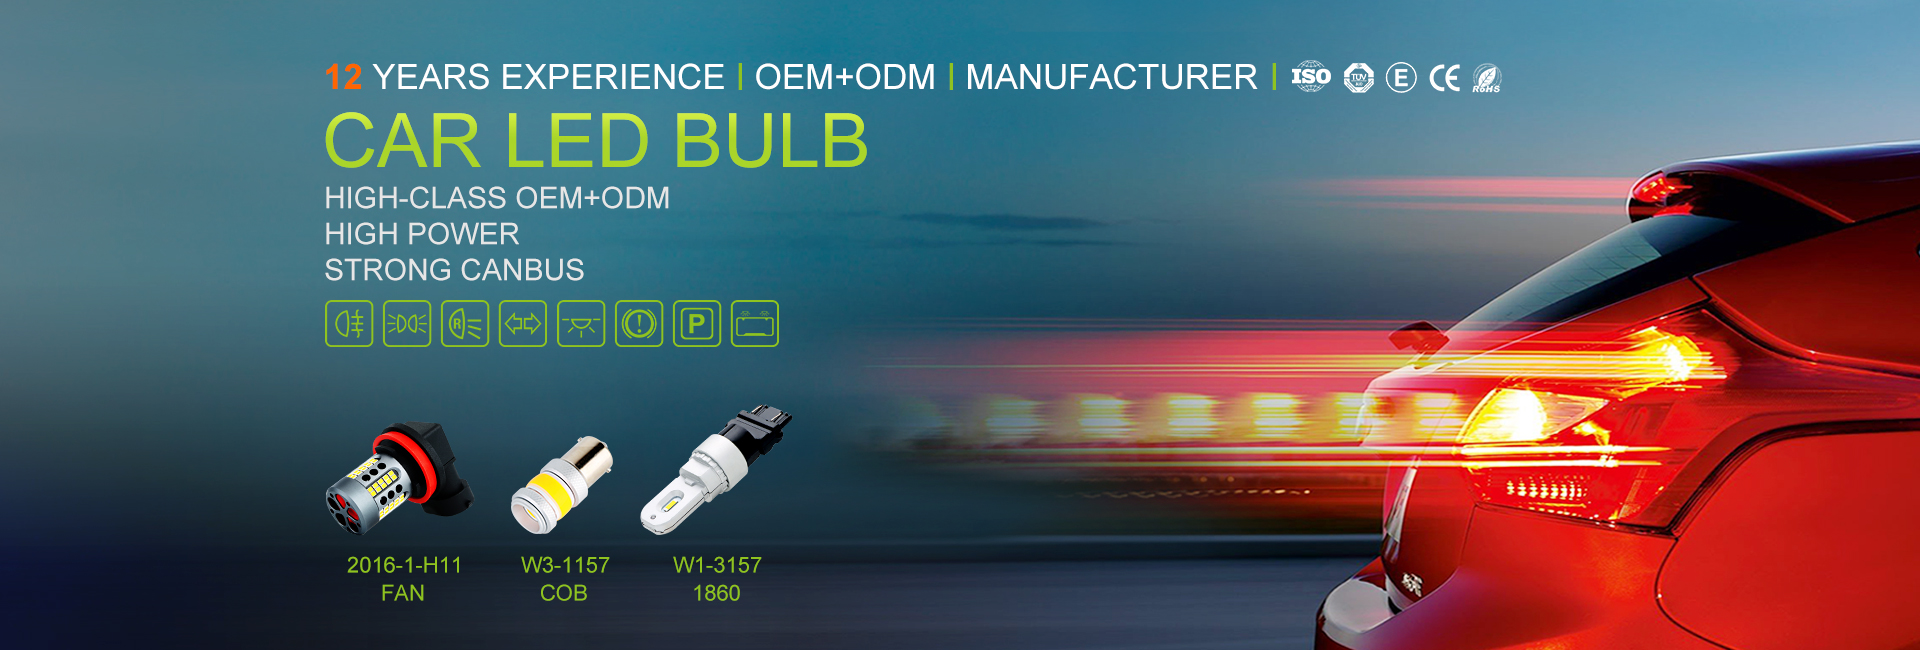 Car LED Bulb